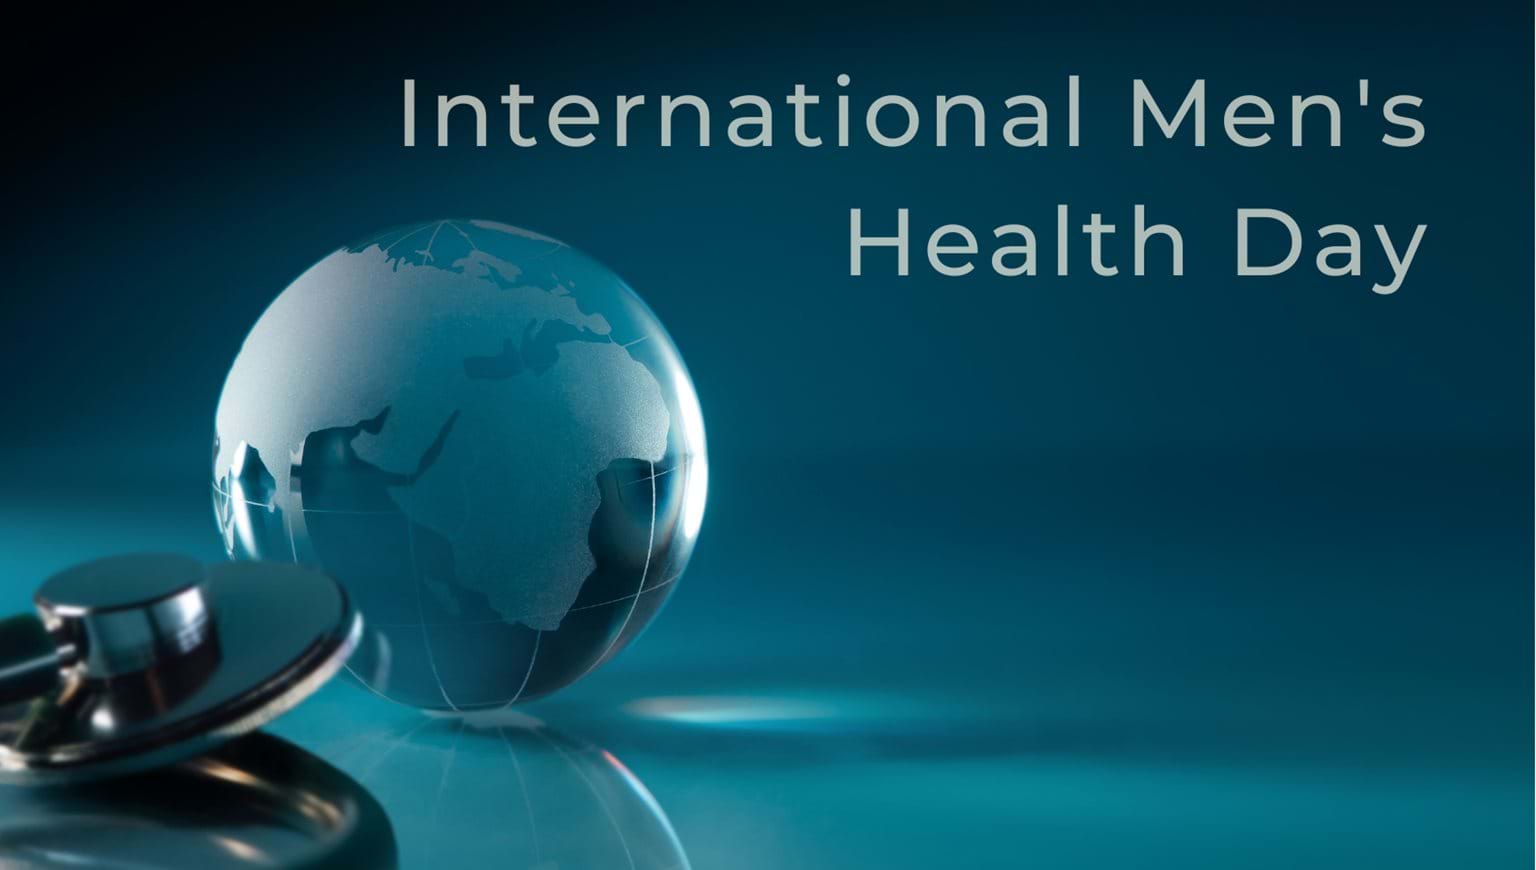 International Men's Health Day